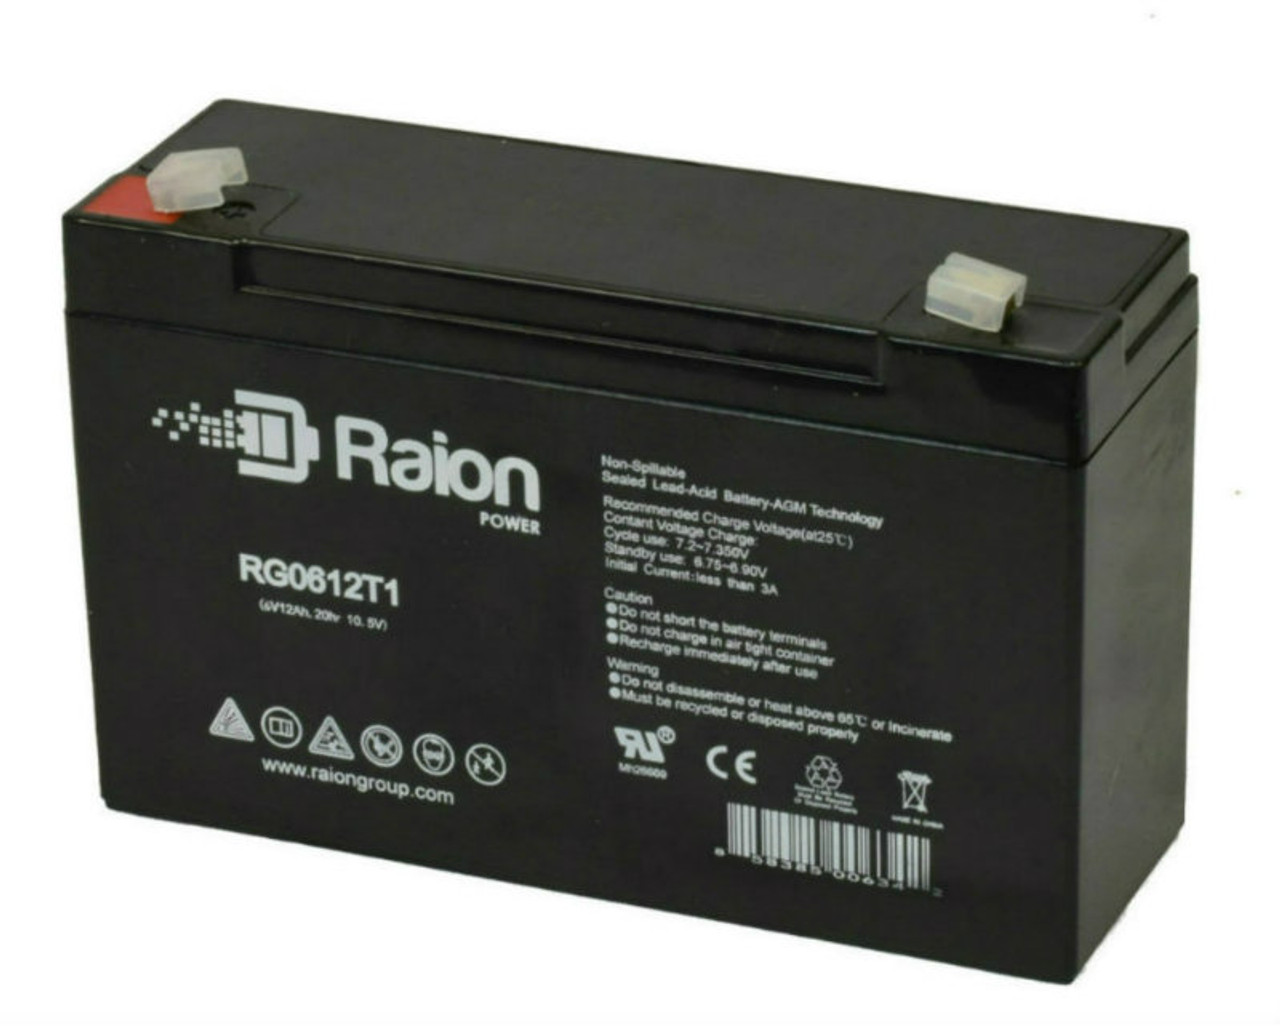 Raion Power RG06120T1 6V 12Ah Replacement UPS Battery Cartridge for Eaton Powerware NetUPS SE 2400RM